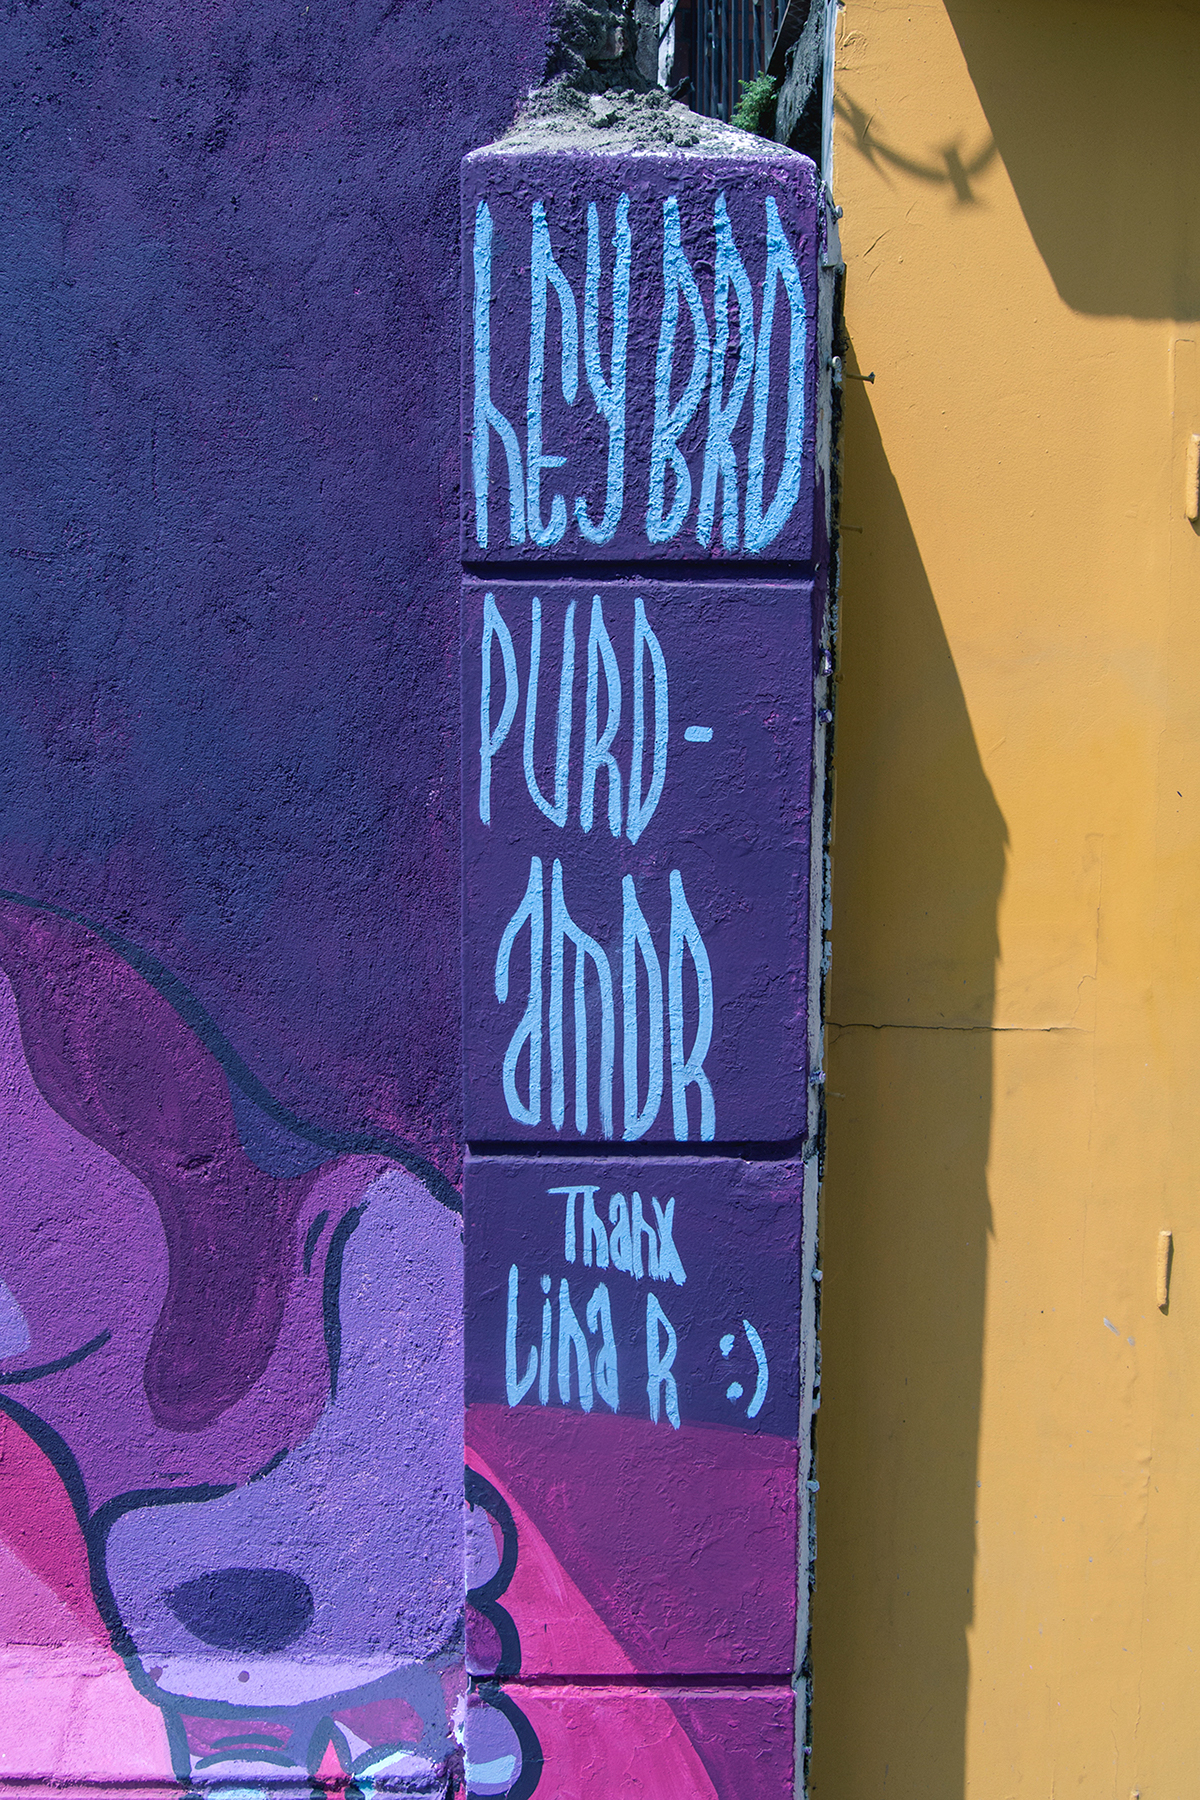 streetart wall Mural lapintoyselacoloreo virgin colombia Urban spray paint hey bro Cali acrylic FOX rabbit psychedelic puro amor